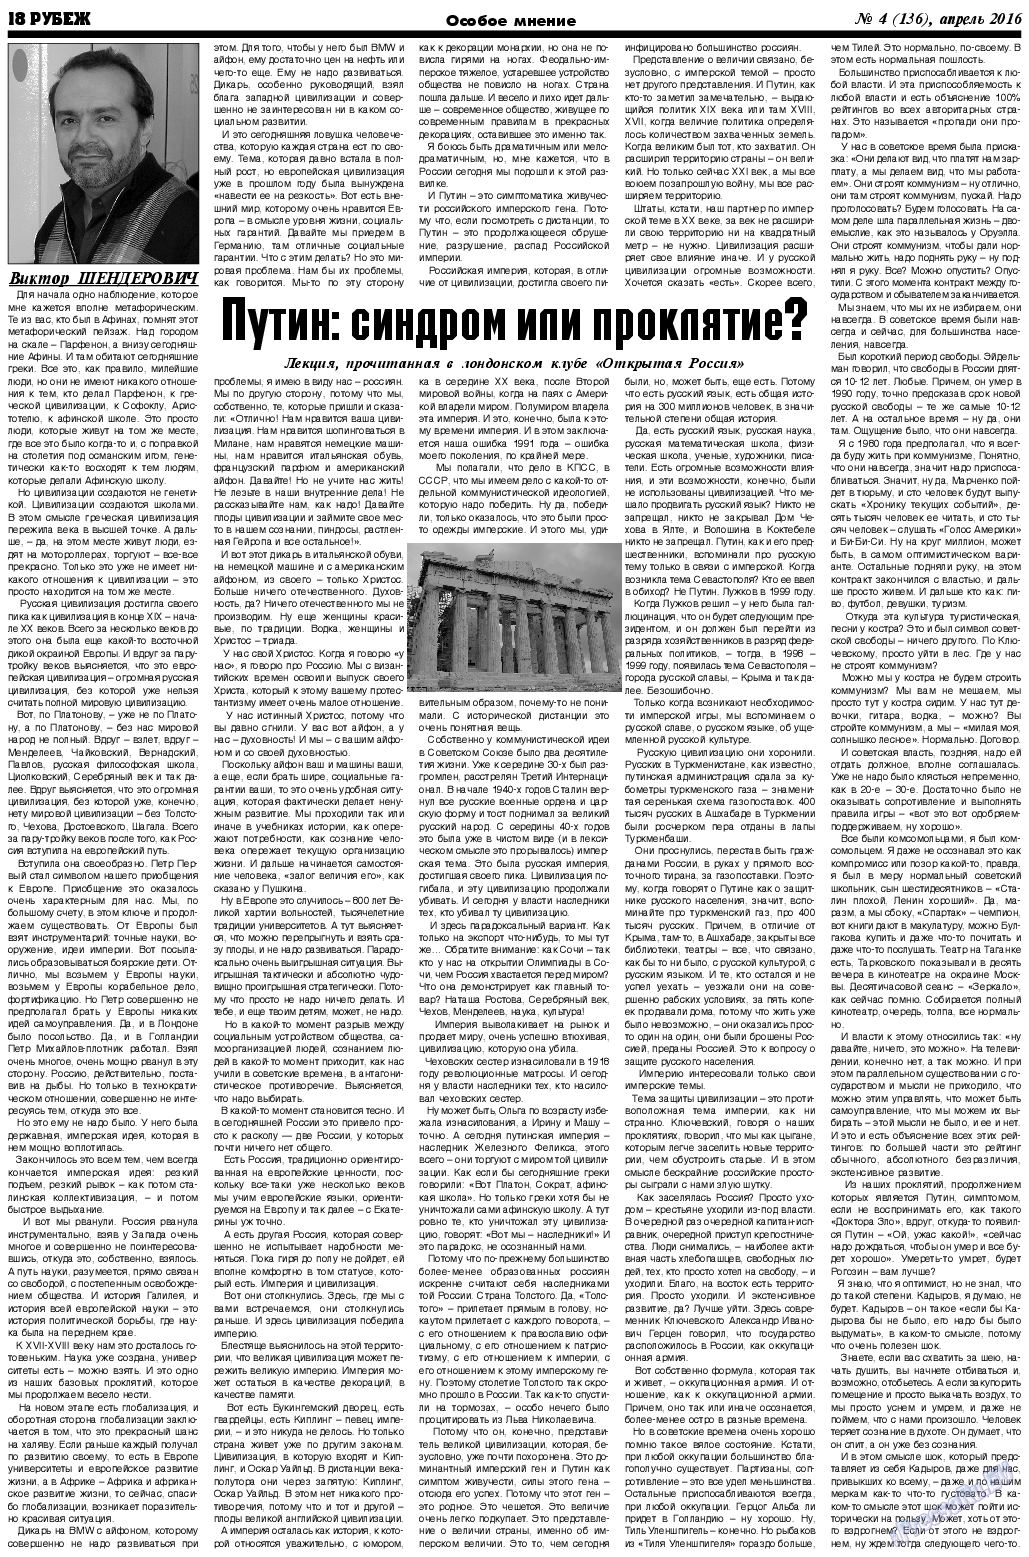 Рубеж, газета. 2016 №4 стр.18